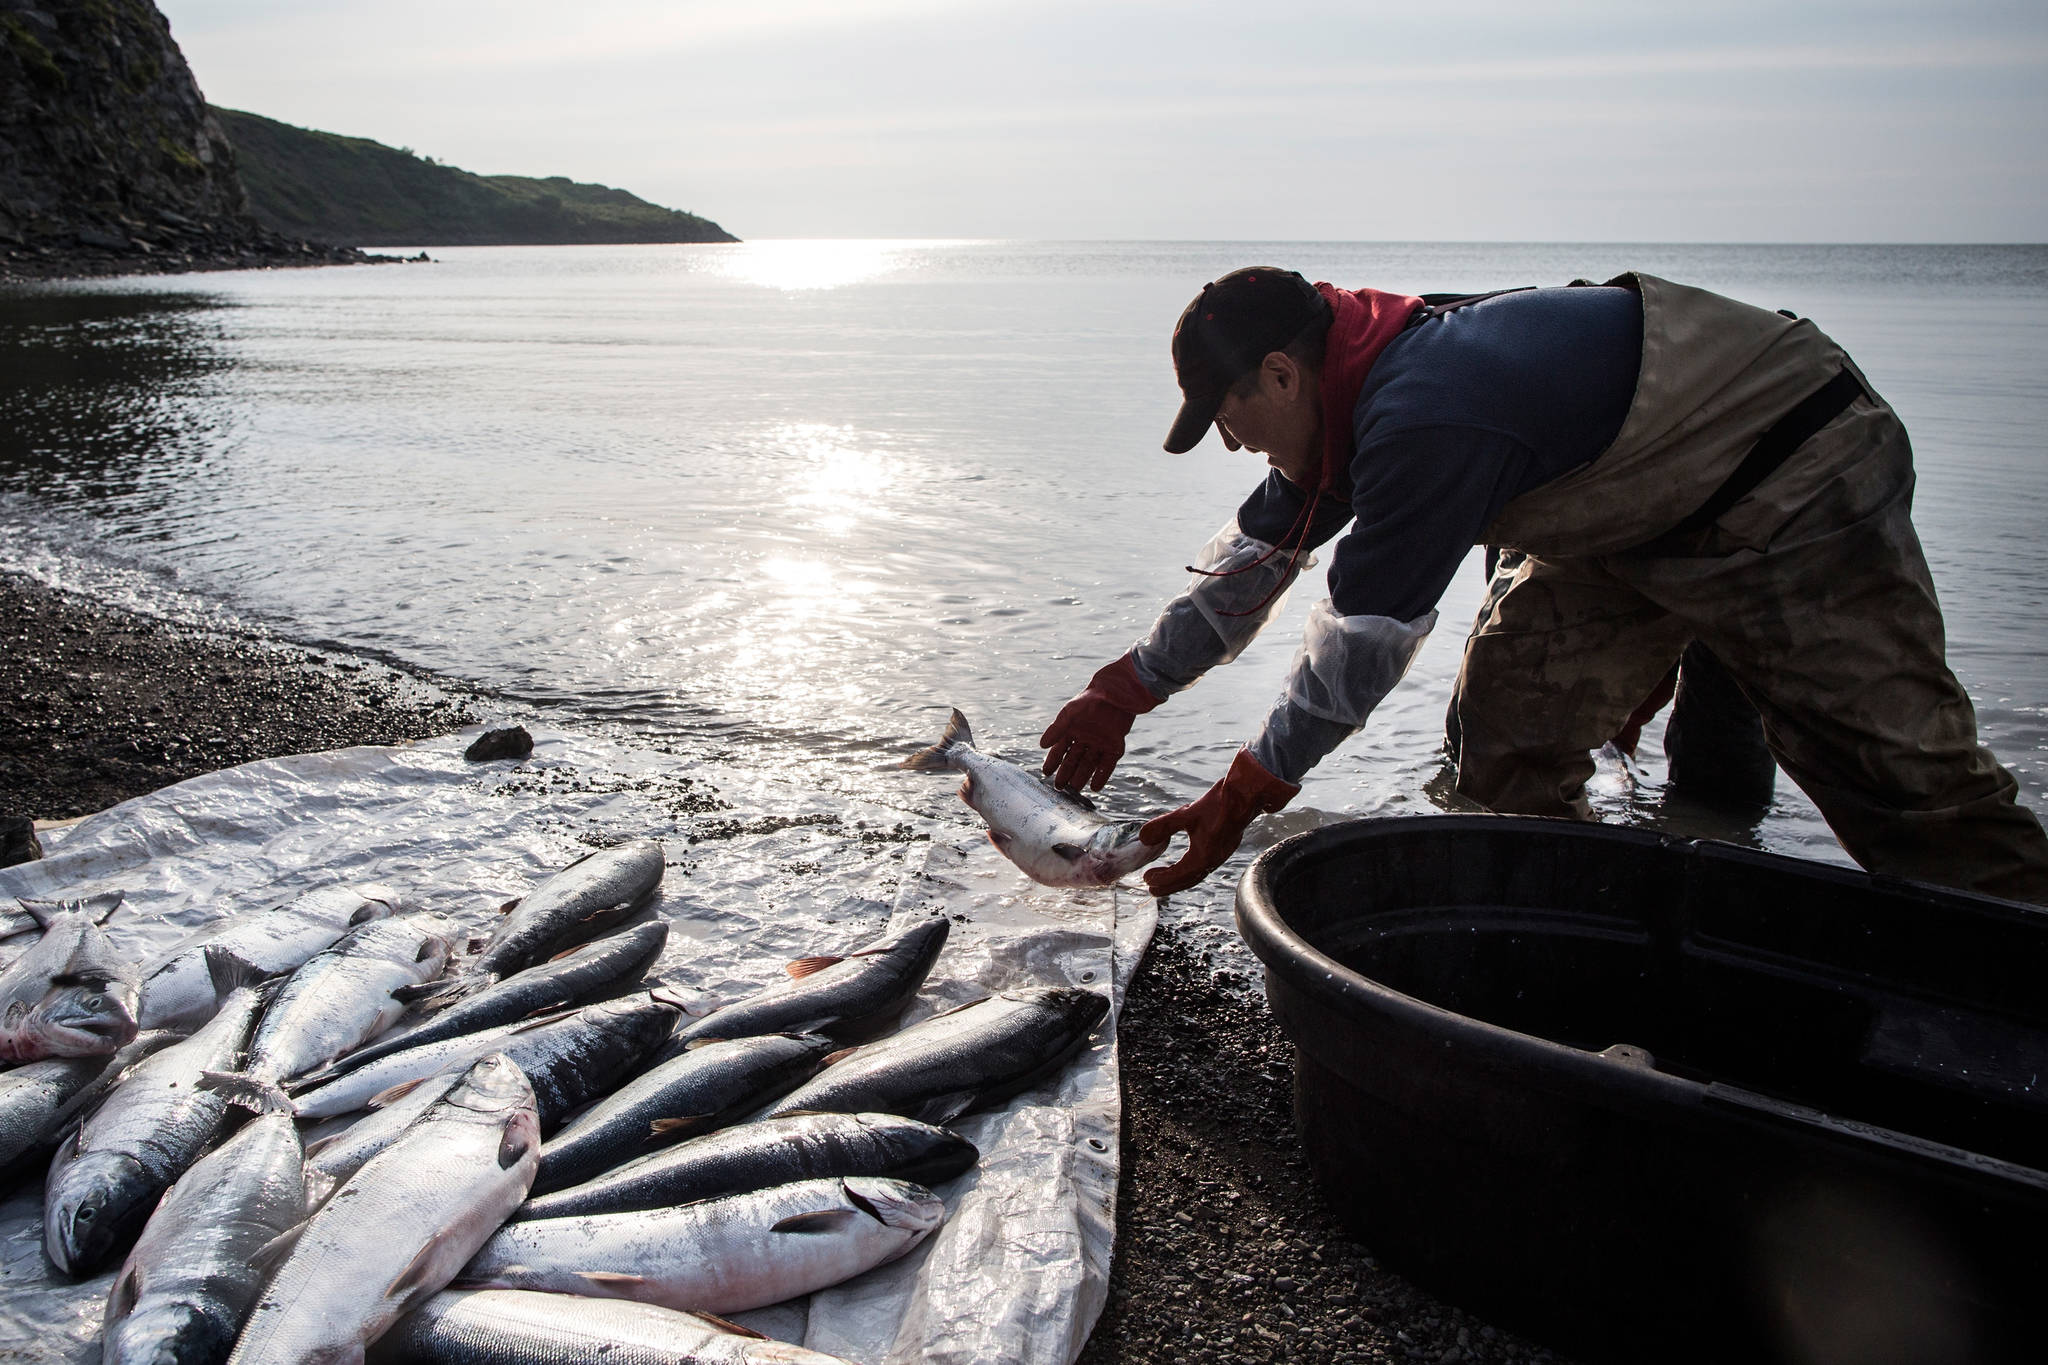 Andrew Burton/Getty Images 
In this 2015 image, Joseph John Jr. washes freshly caught salmon in Newtok, Alaska.